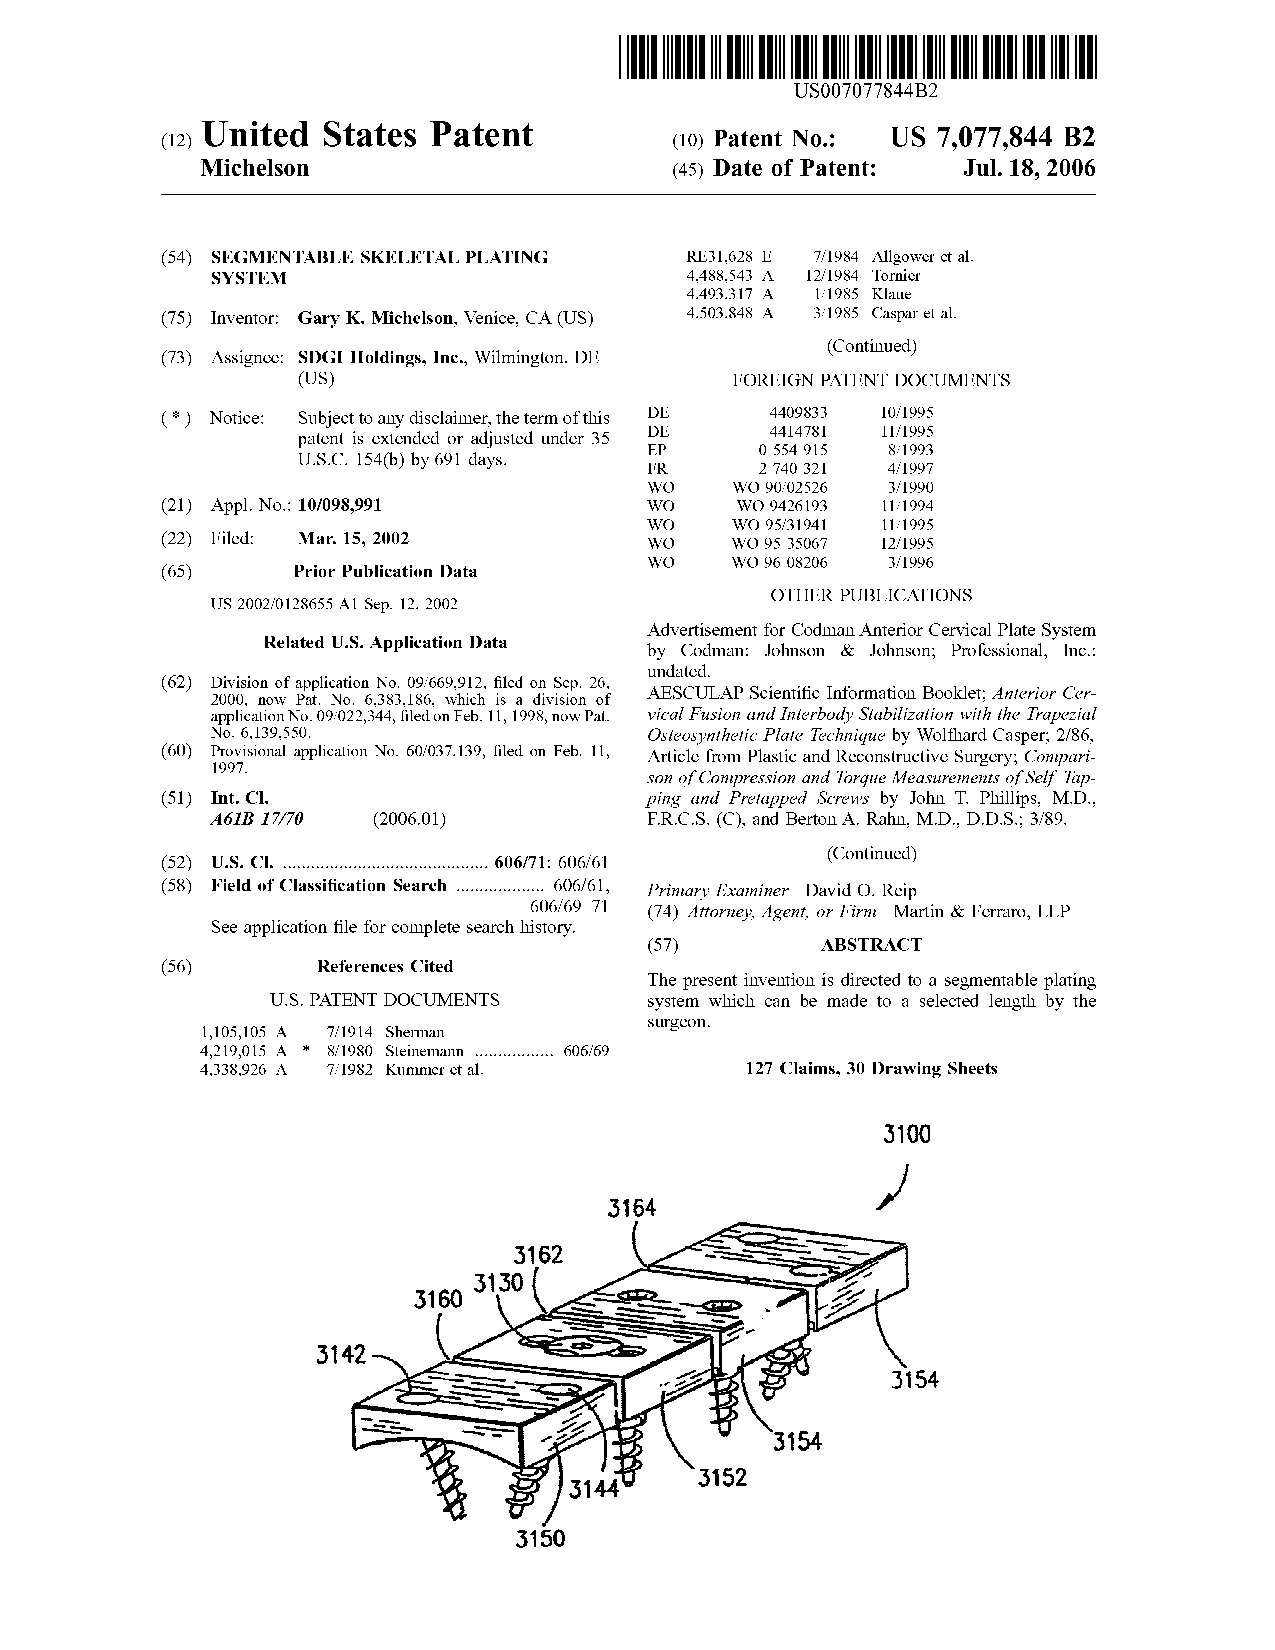 Segmentable skeletal plating system - Patent 7,077,844